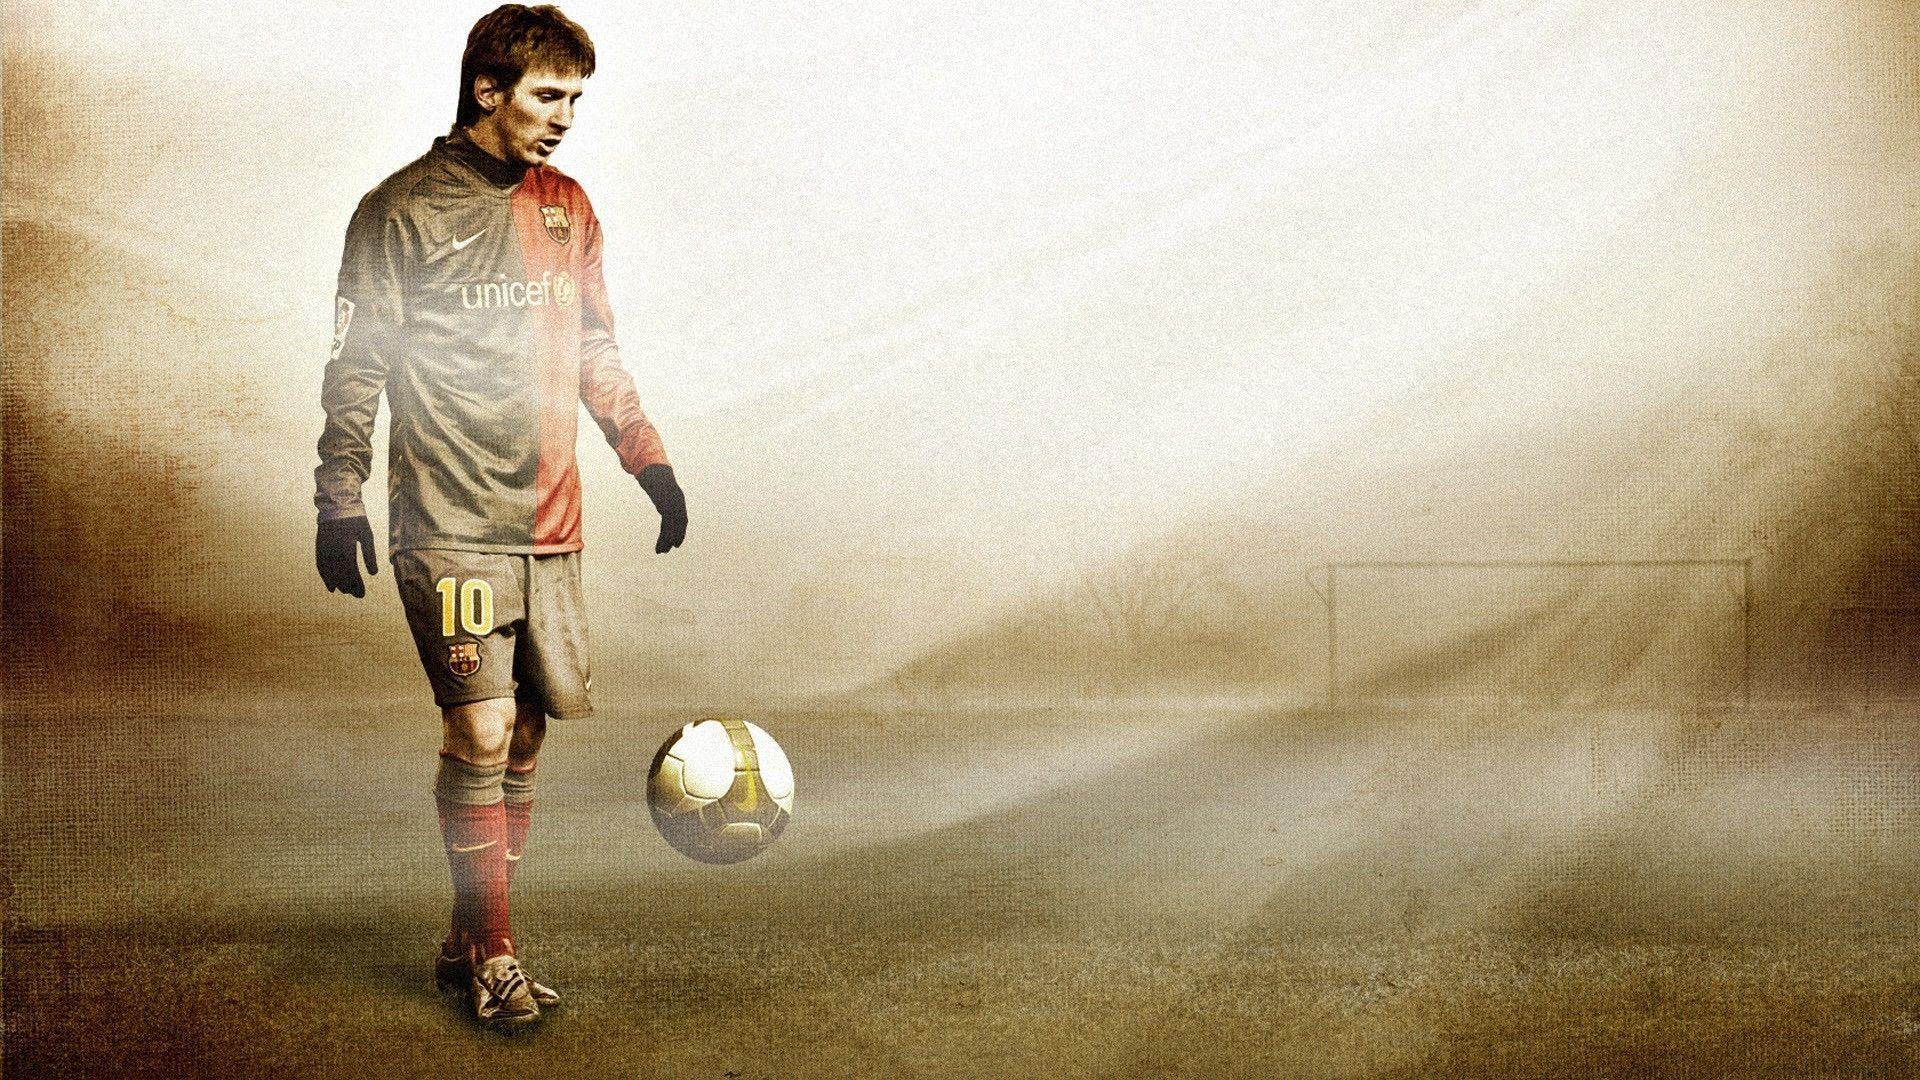 Lionel Messi HD Wallpaper Free Download. HD Free Wallpaper Download